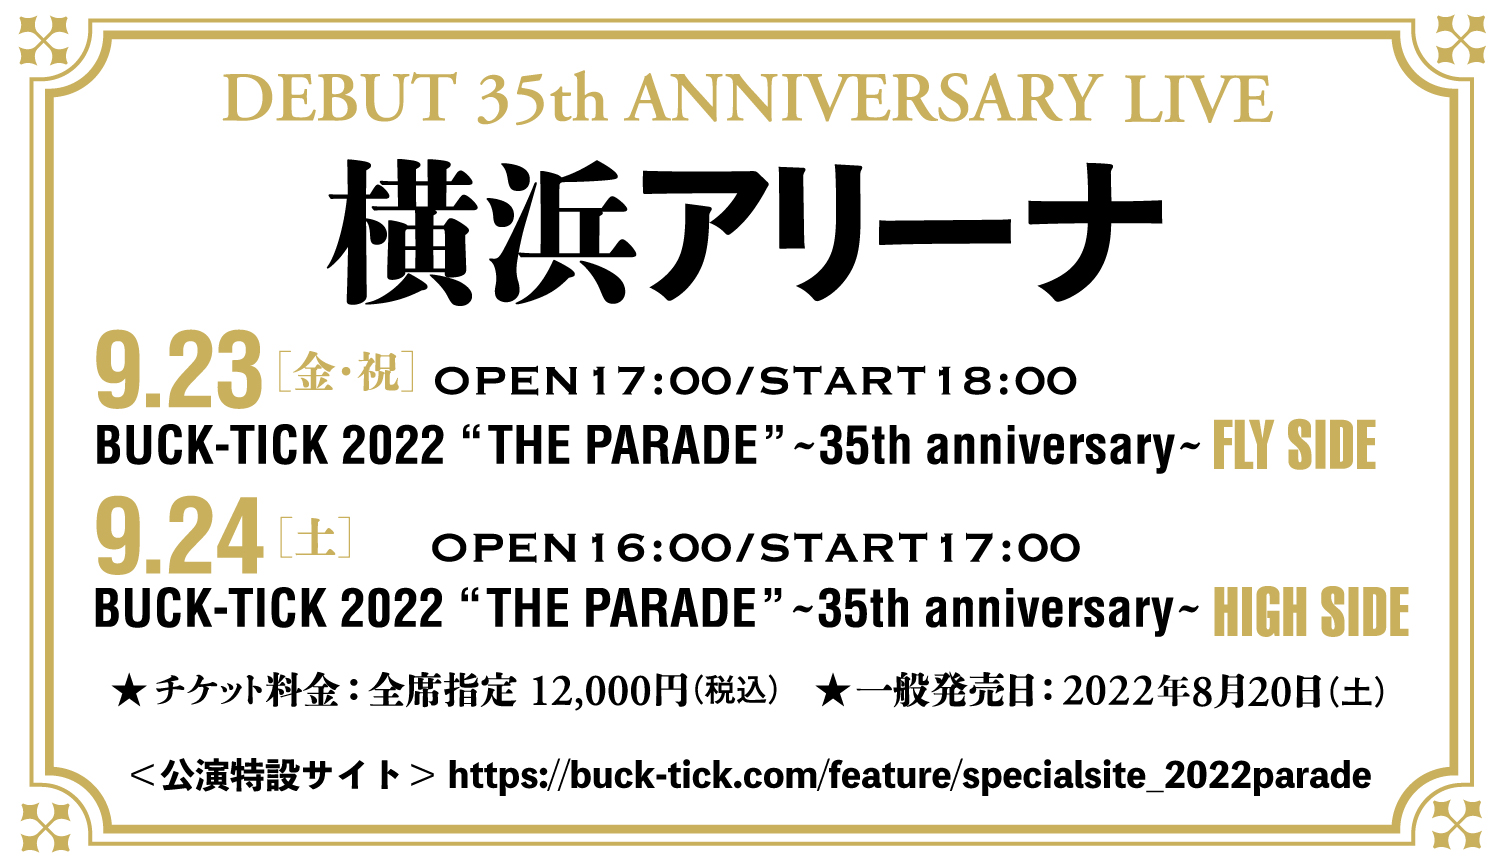 BUCK-TICK 2022 "THE PARADE" 〜35th anniversary〜